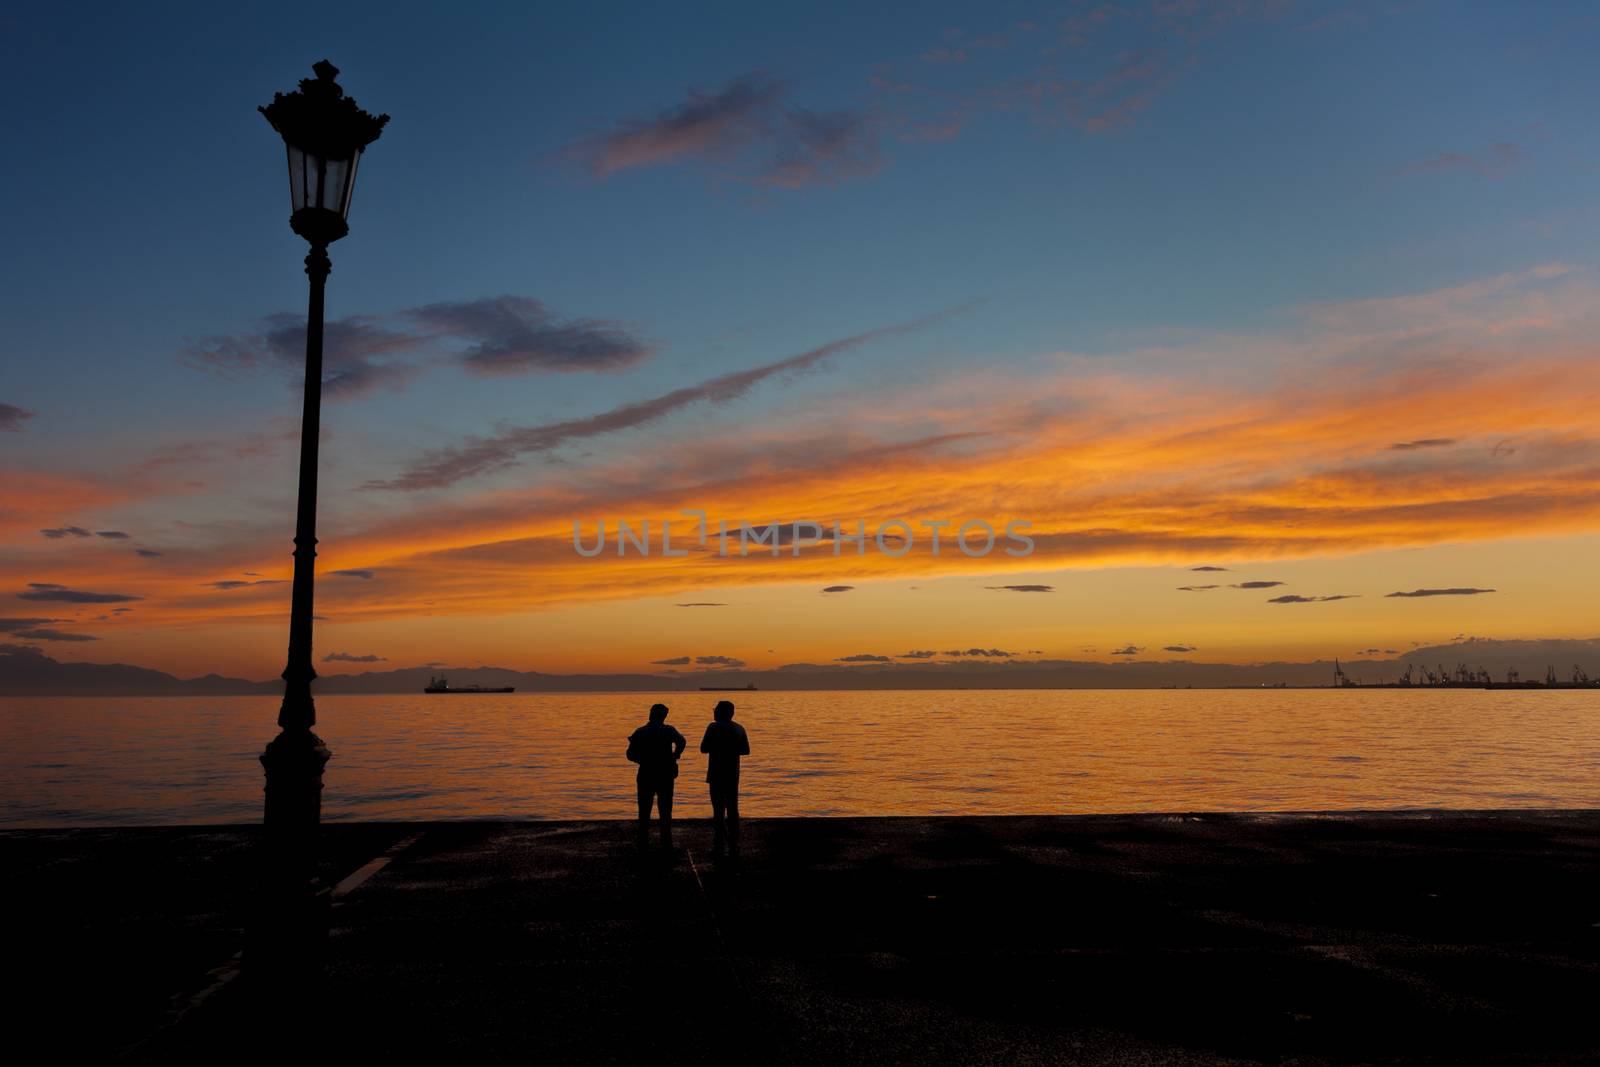 Majestic sunset at the seaside of Thessaloniki - Greece